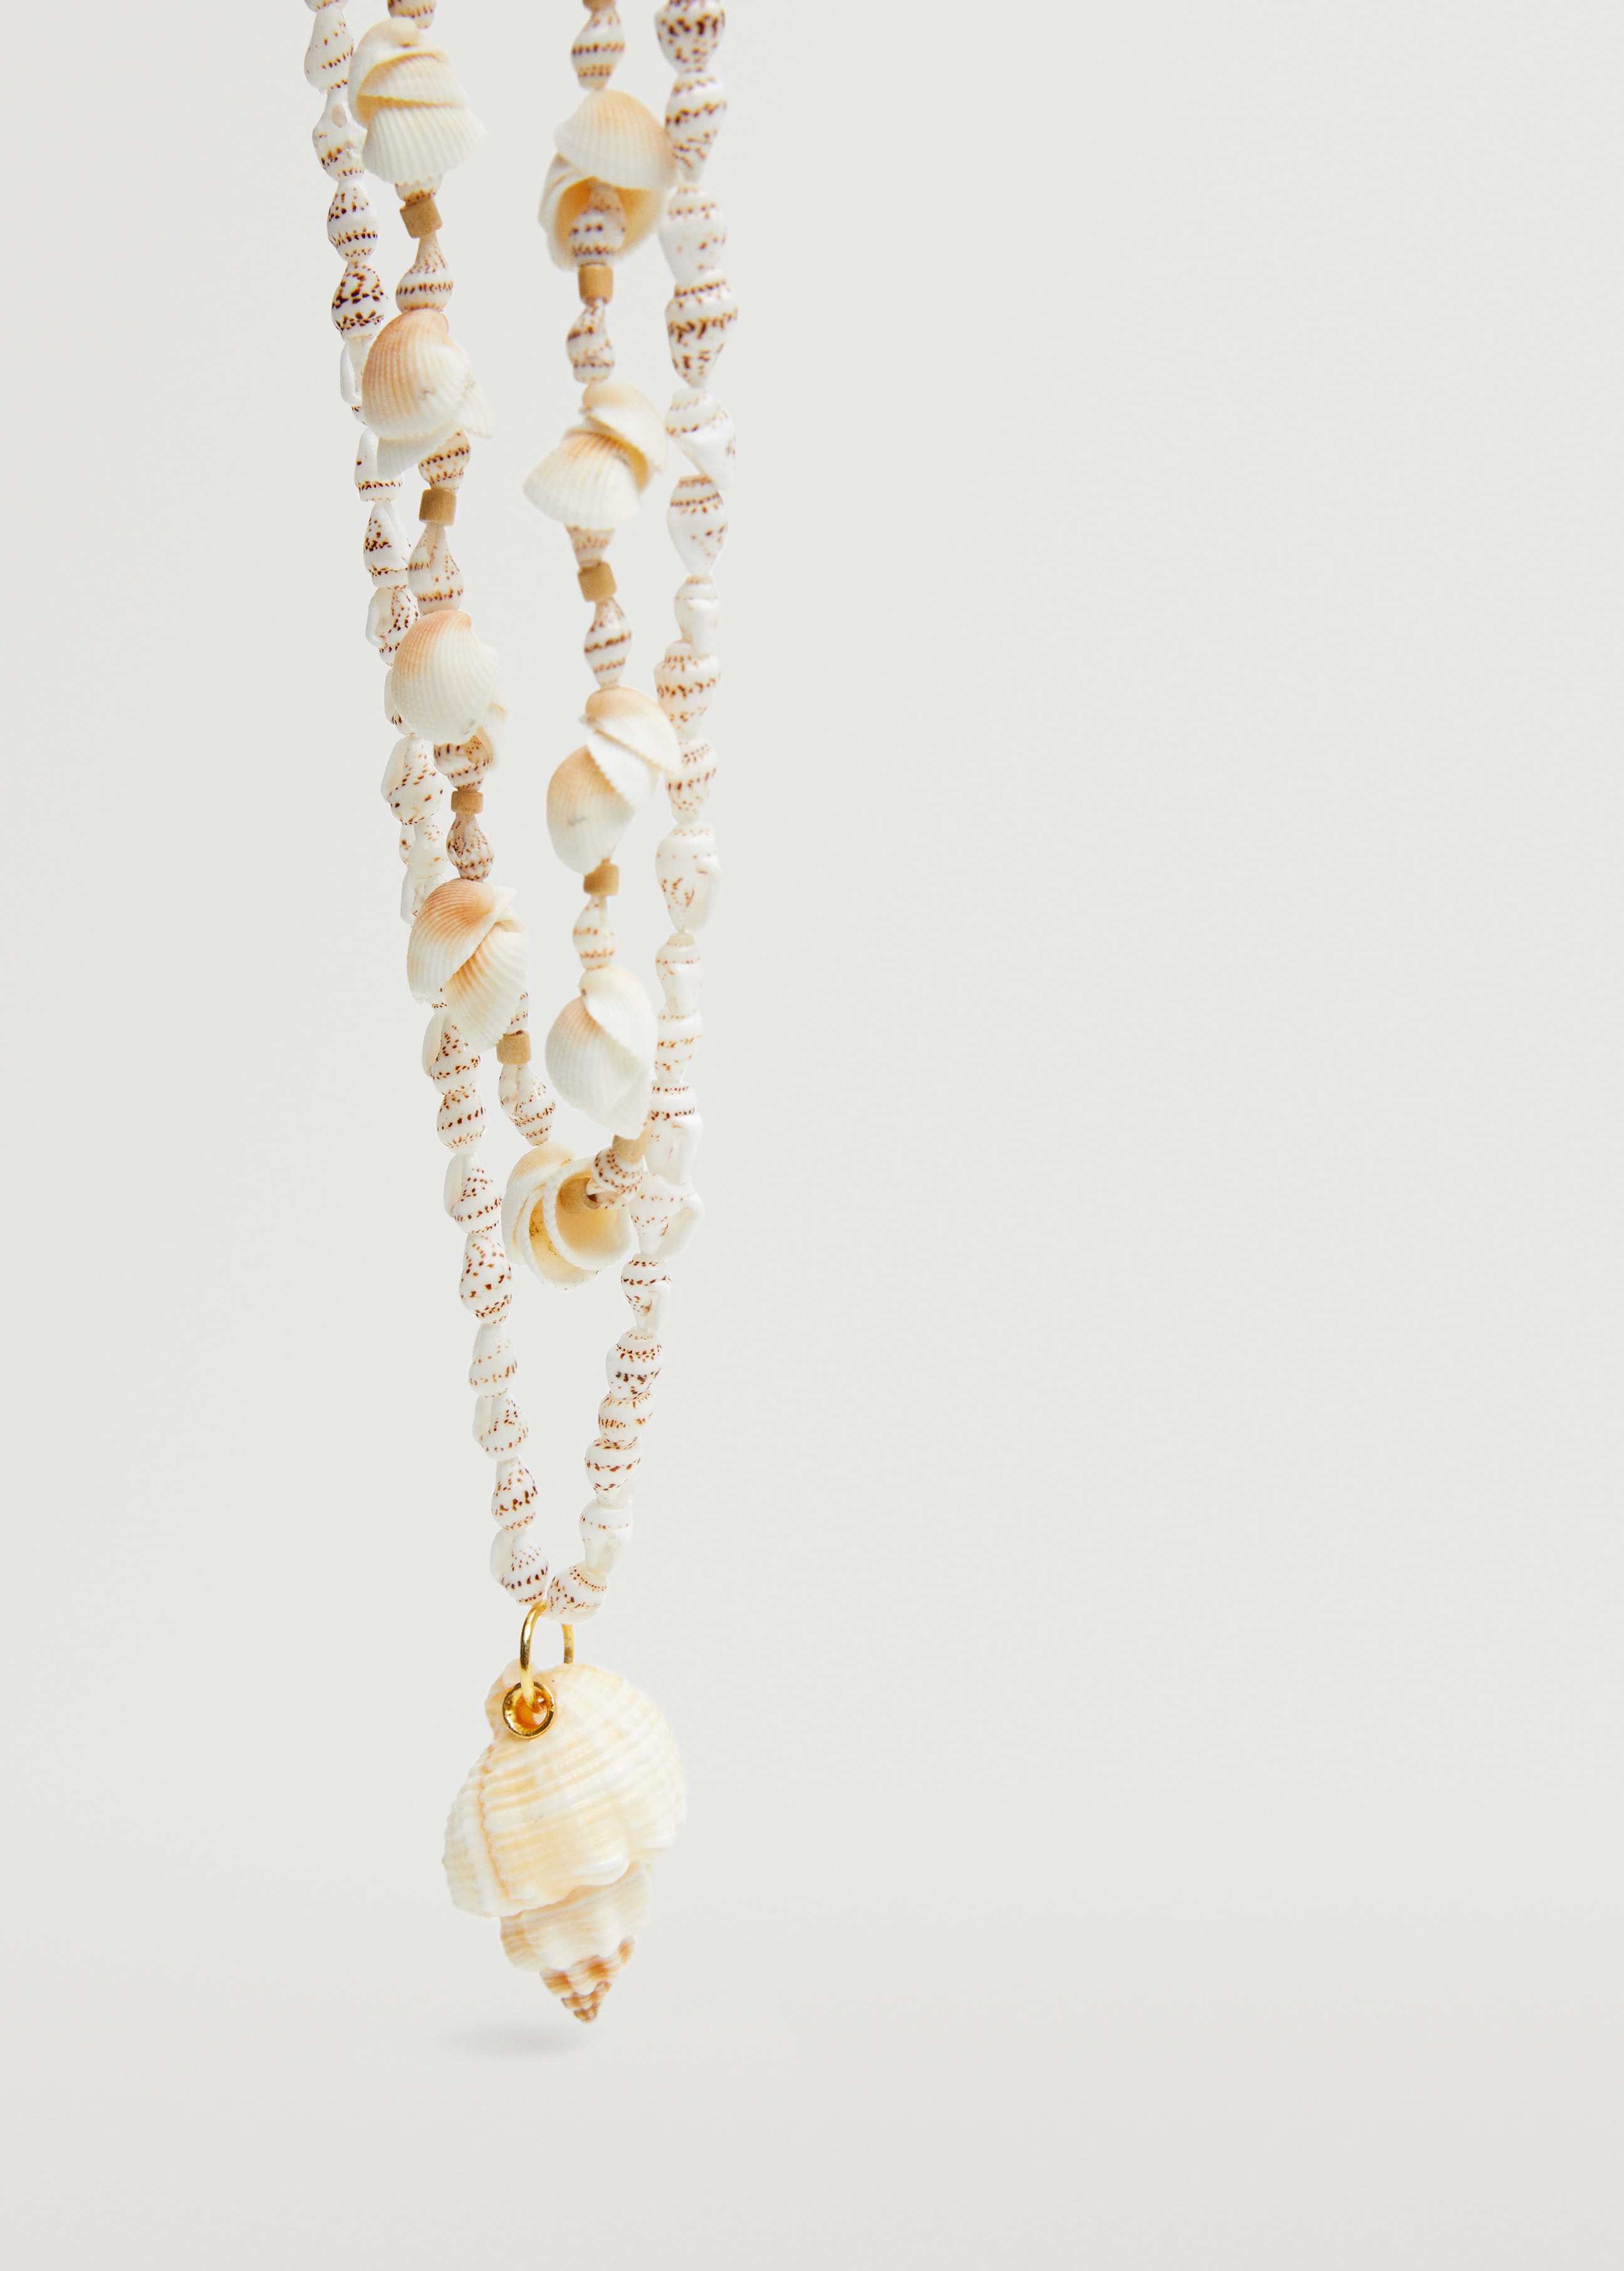 Shell pendant necklace - Medium plane